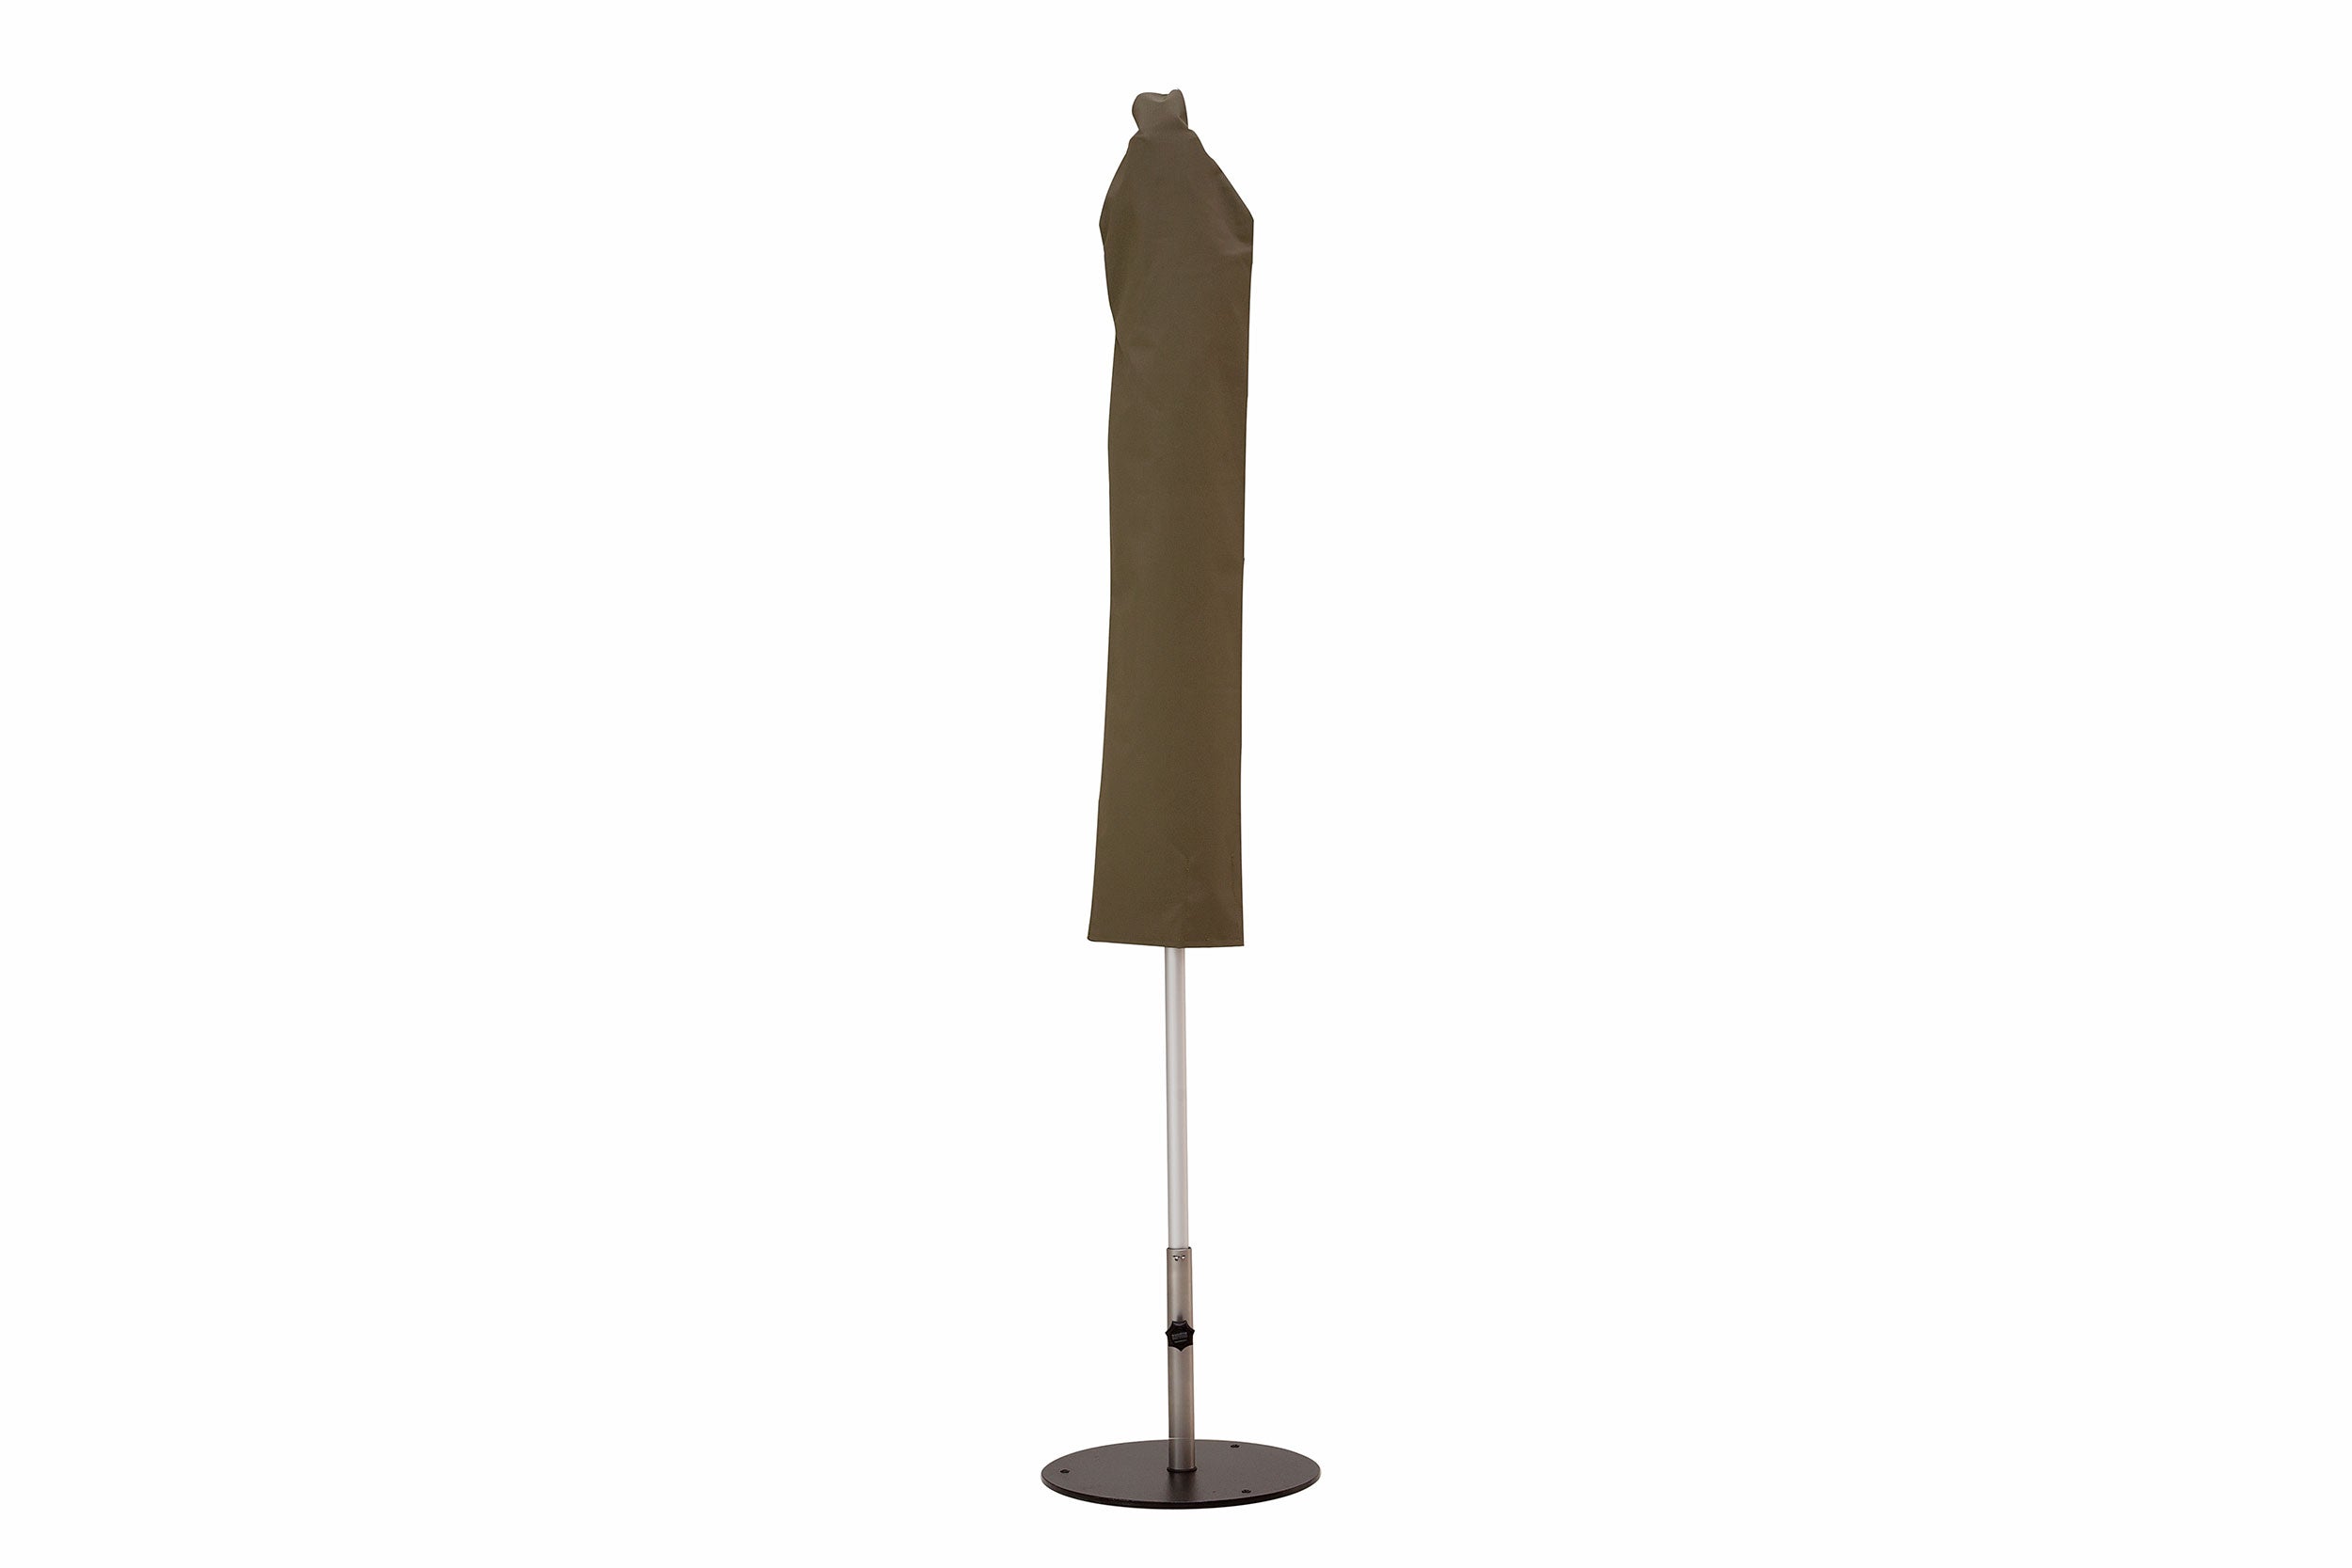 Woodline - 10' Round Pulley Lift Umbrella, Aluminum/Stainless Steel - Mistral, Inox - MI30RA